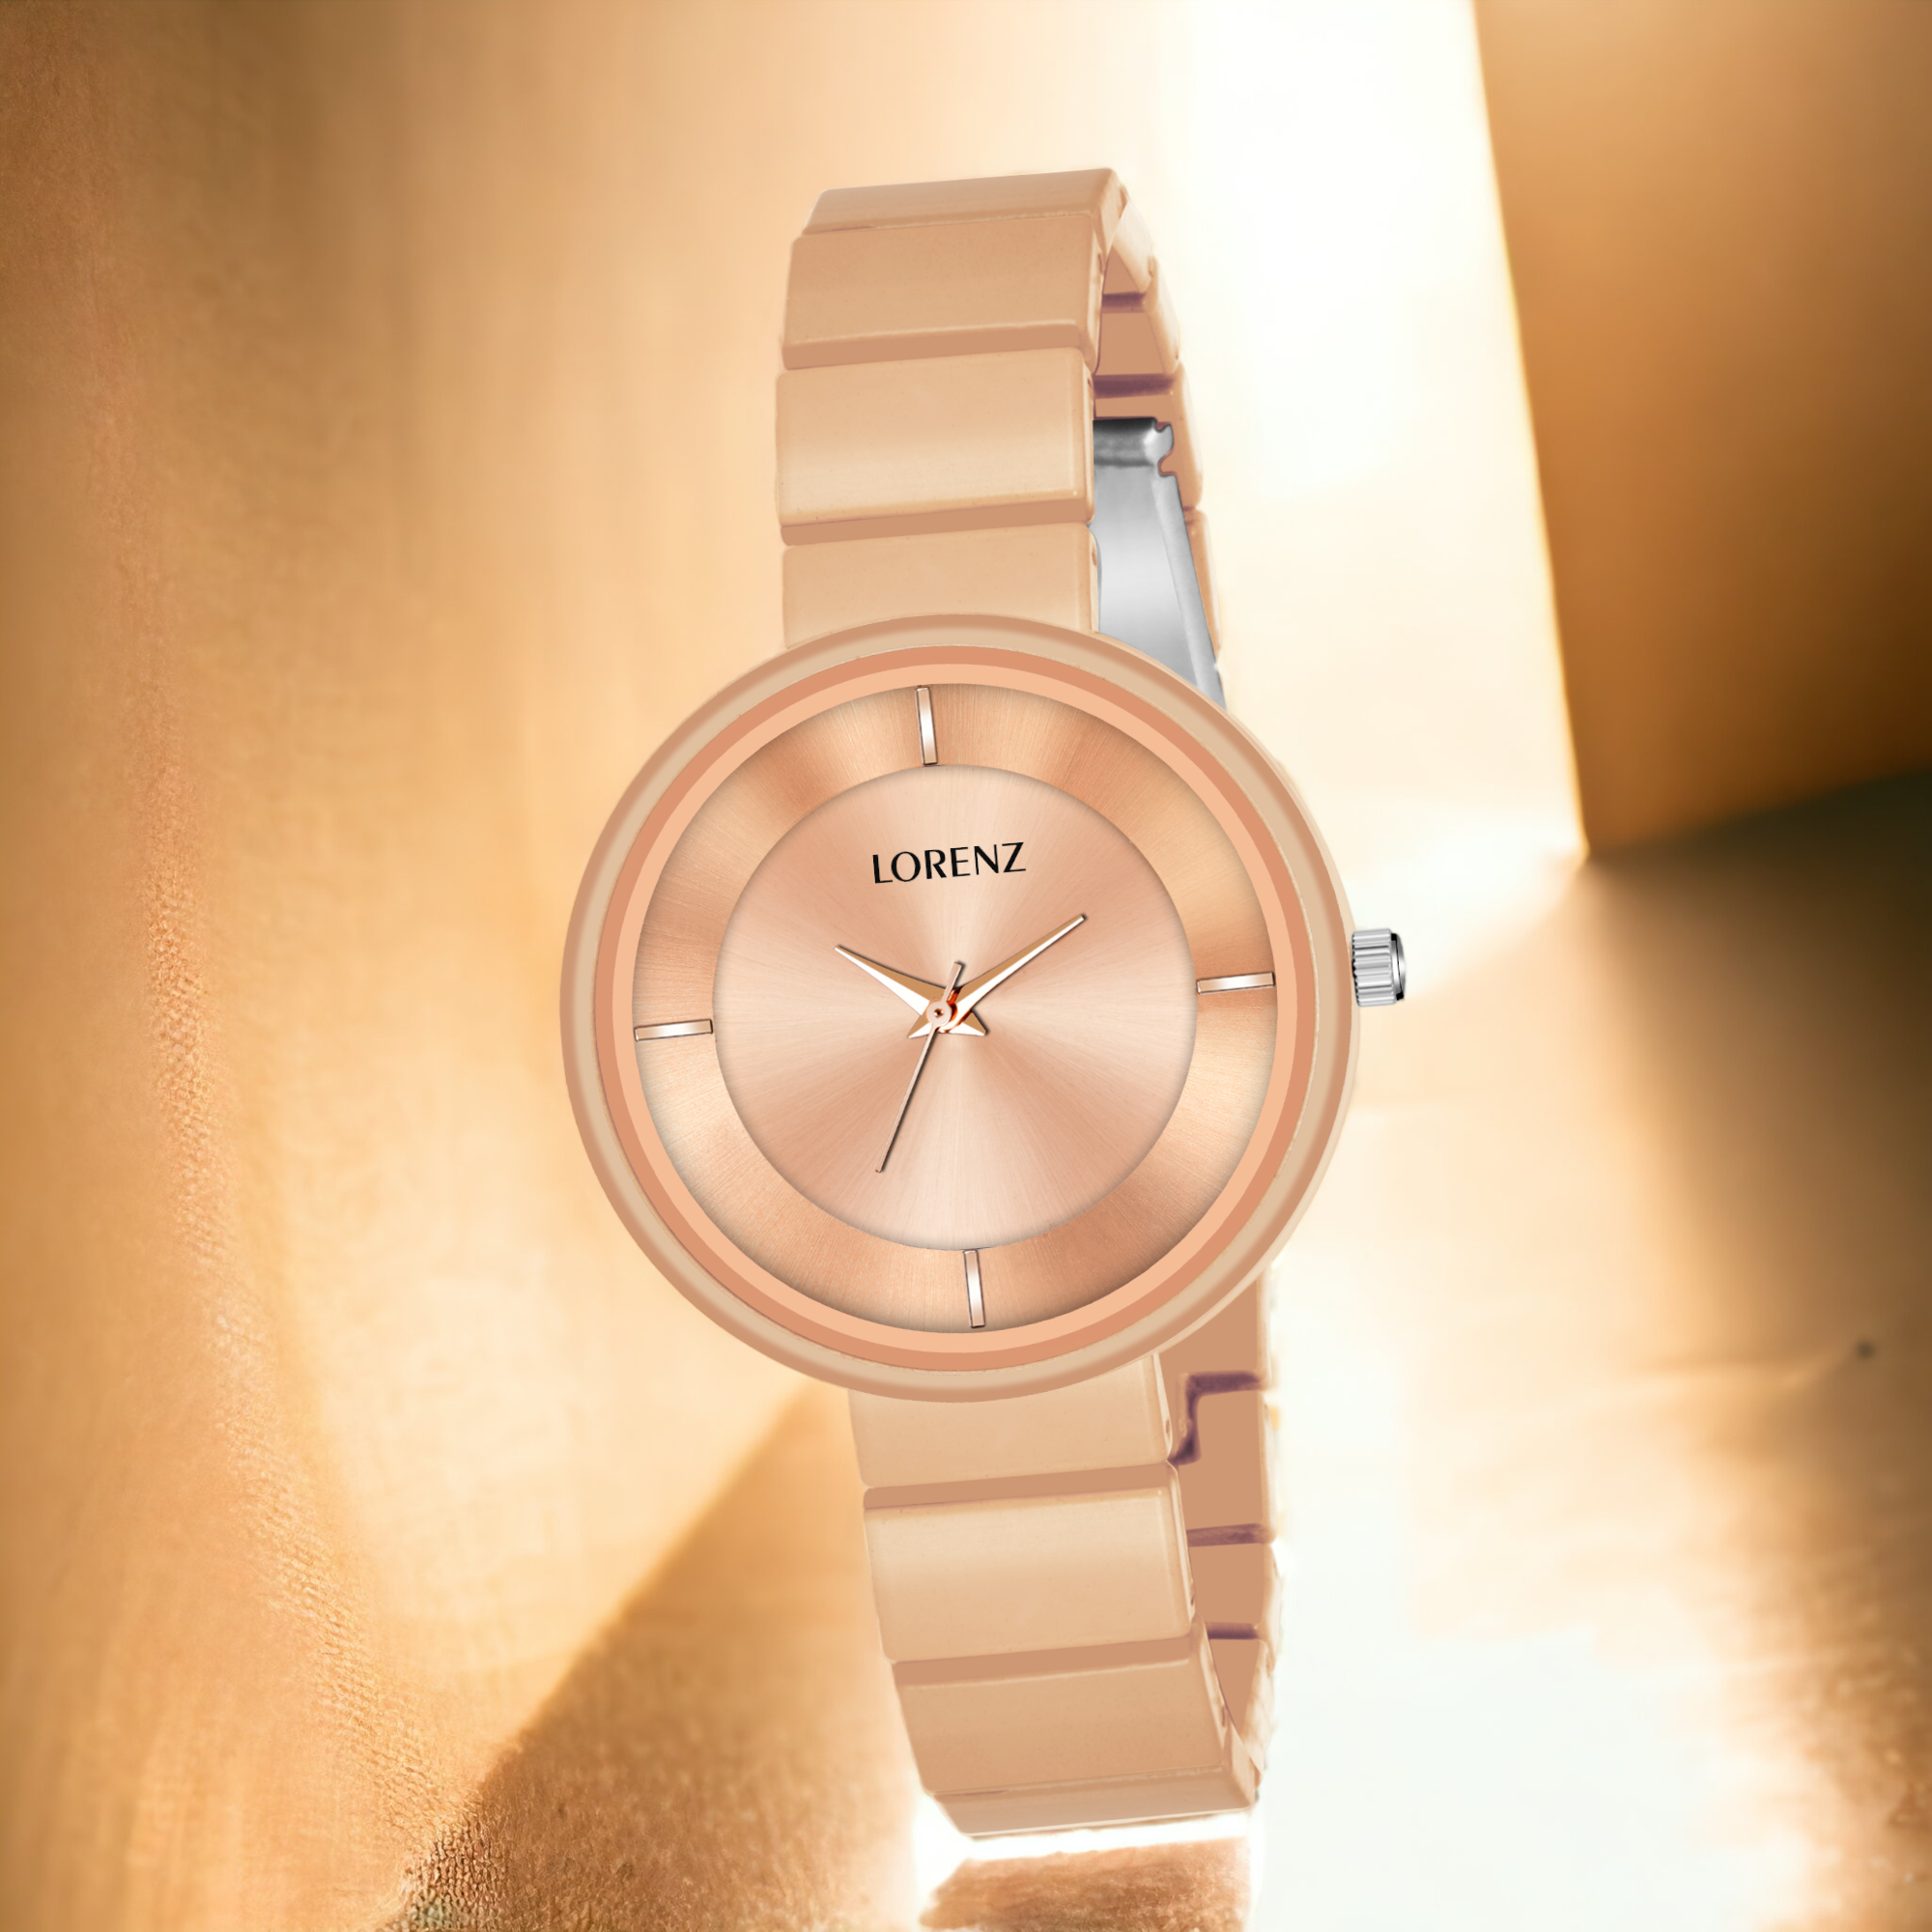 Lorenz Women's Rose Gold Analog Watch with Luxury Finish